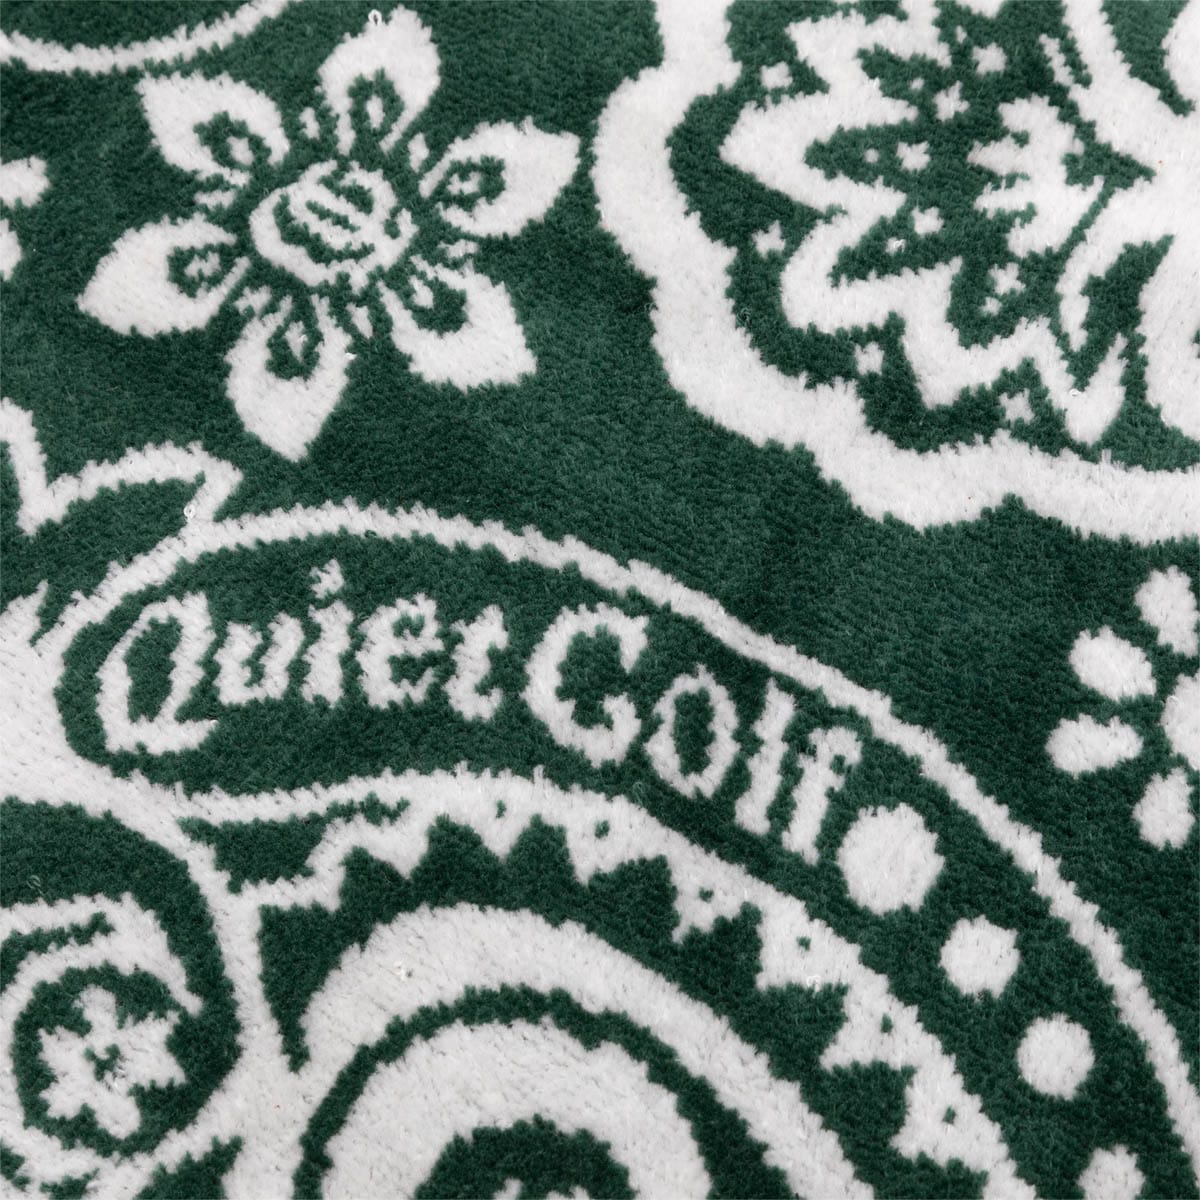 Quiet Golf Golf FOREST / O/S PAISLEY GOLF RAG